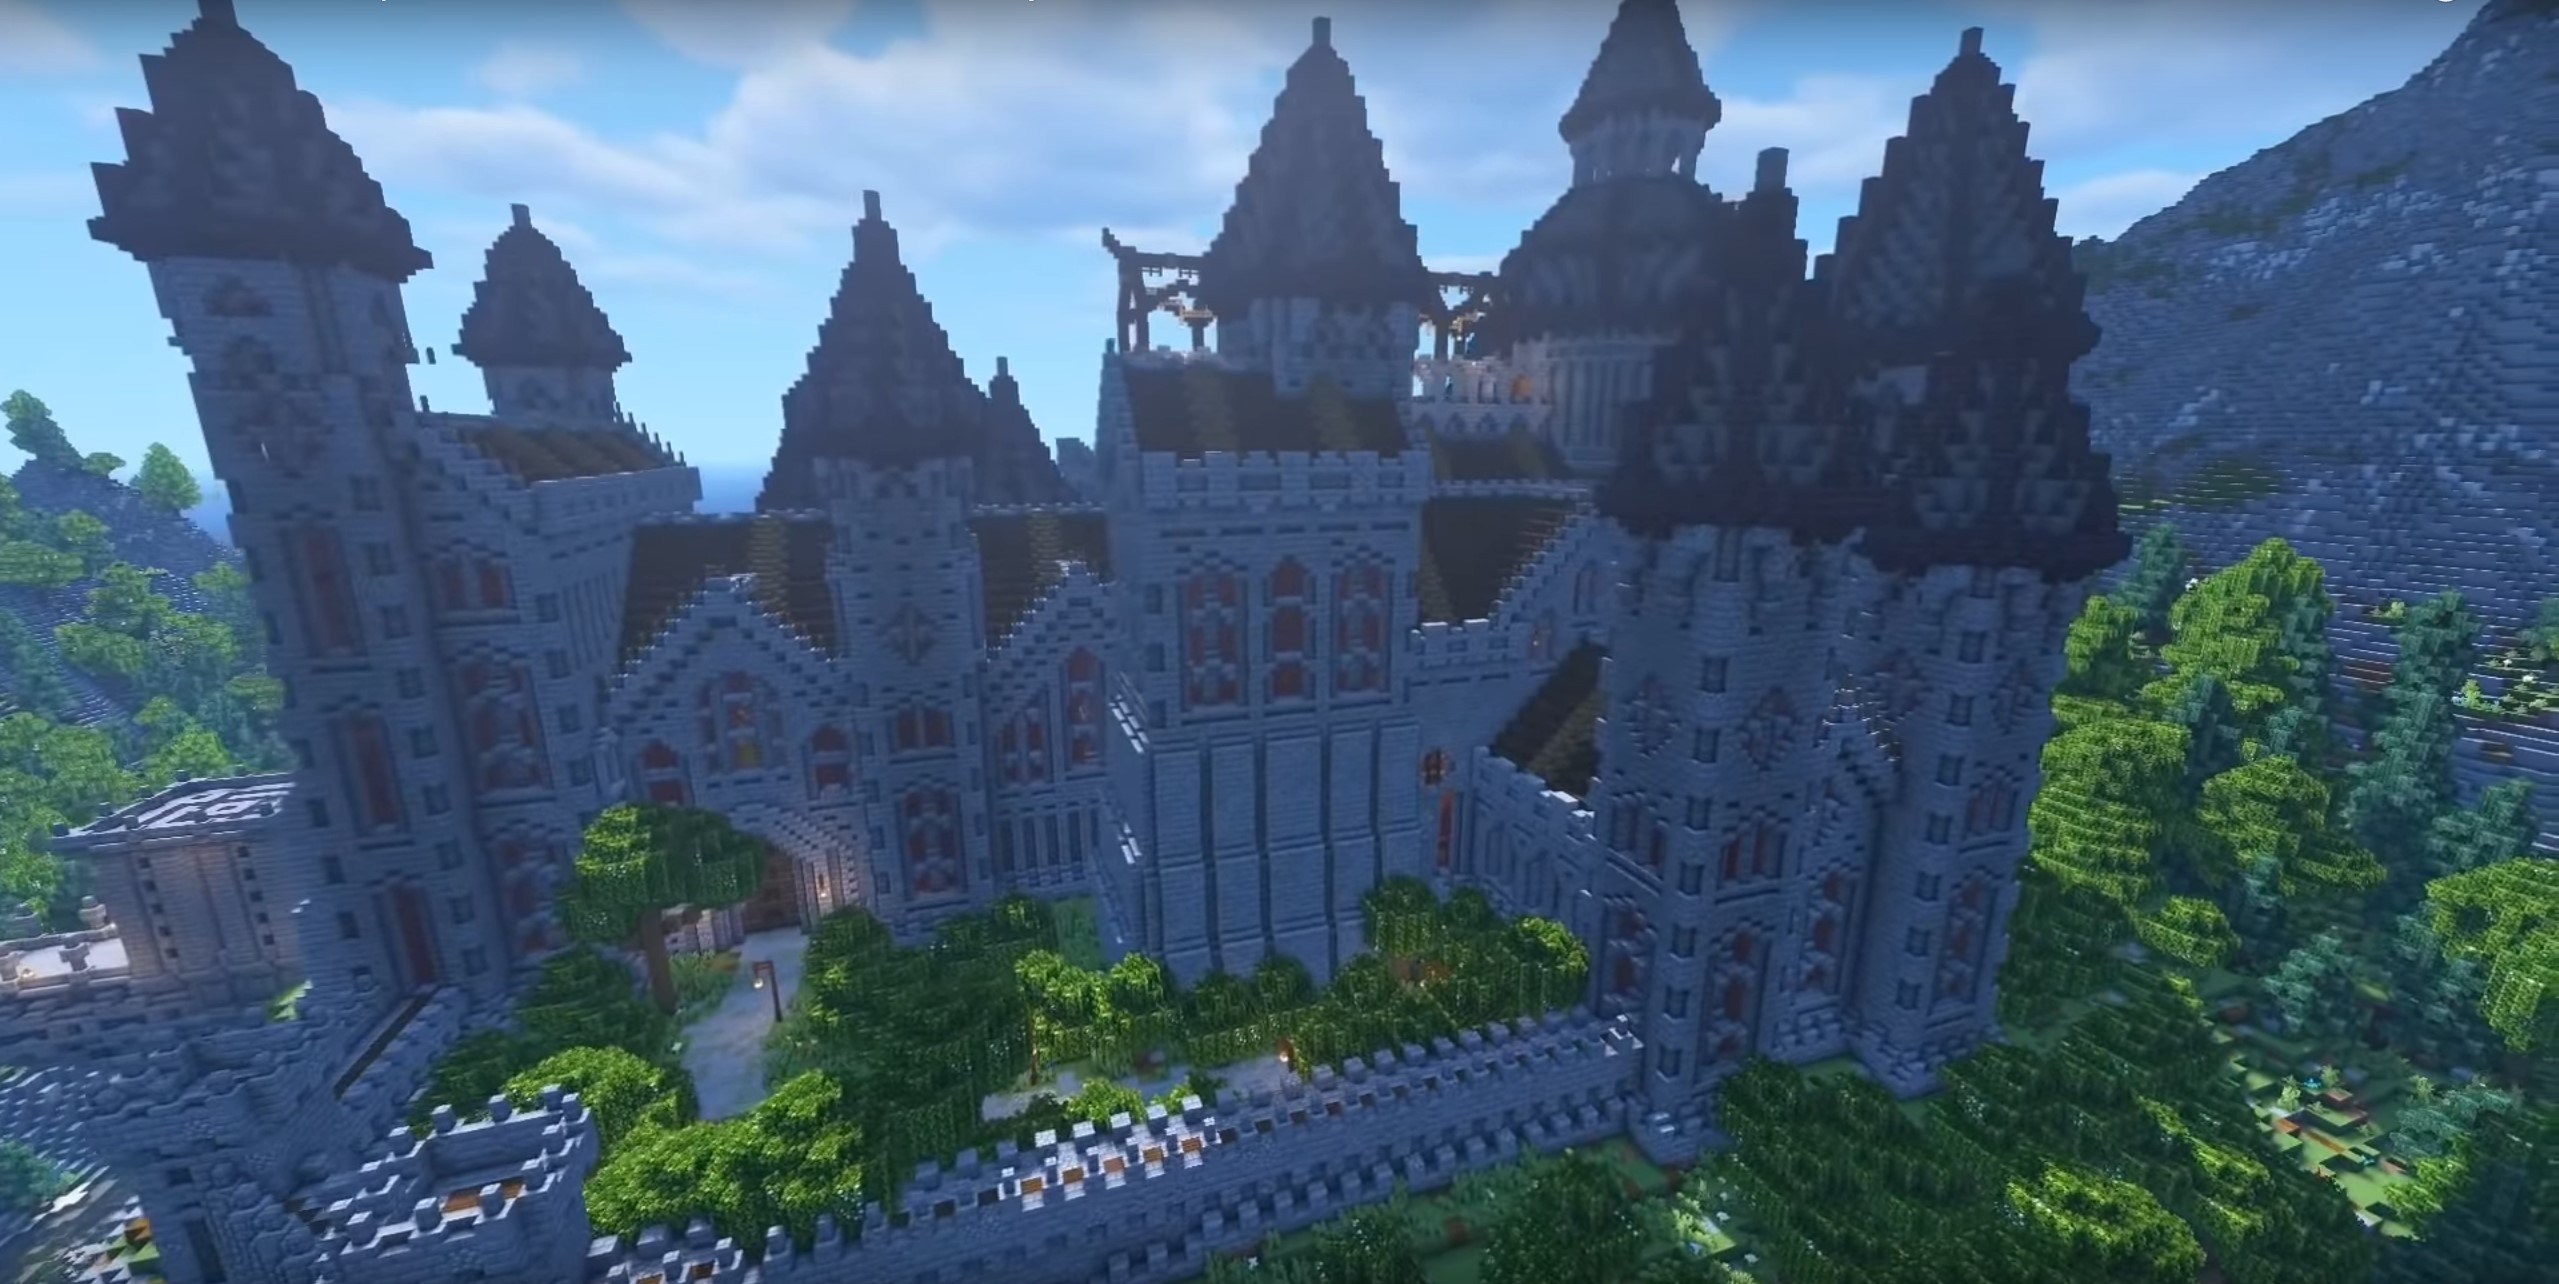 Gothic Castle minecraft building idea